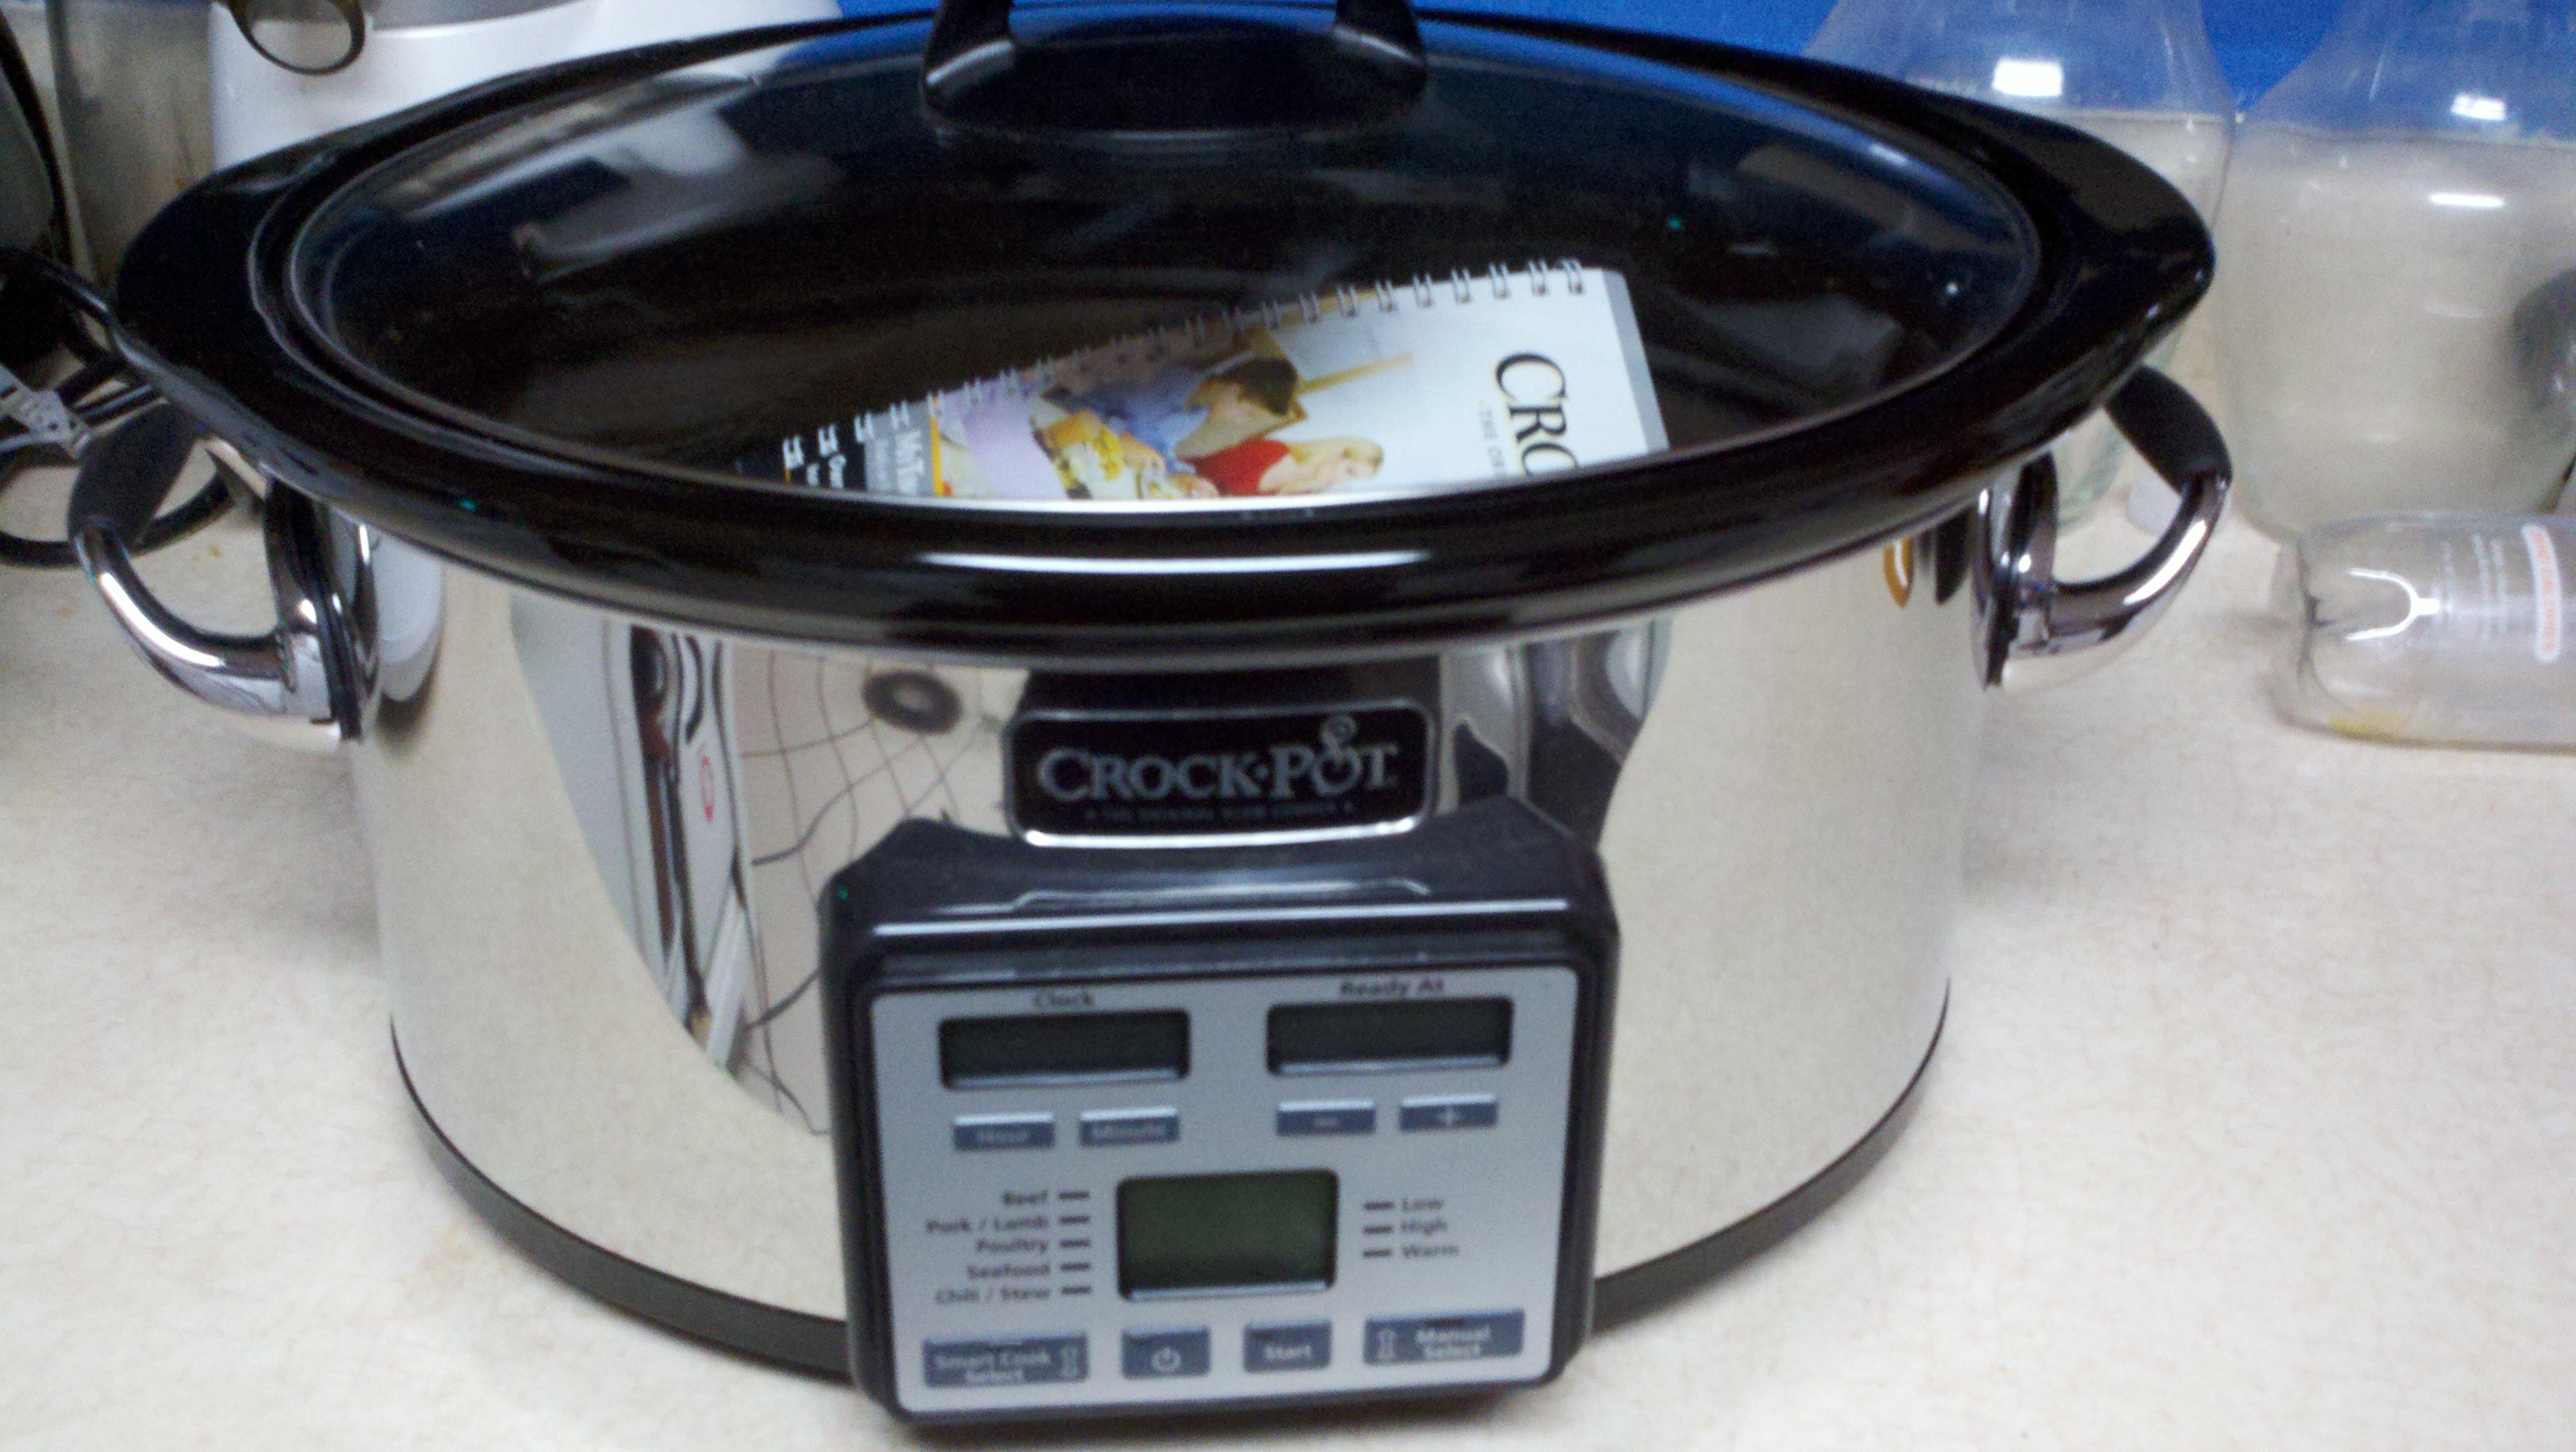 My Favorite Crock-Pot 6-Quart Programmable Slow Cooker